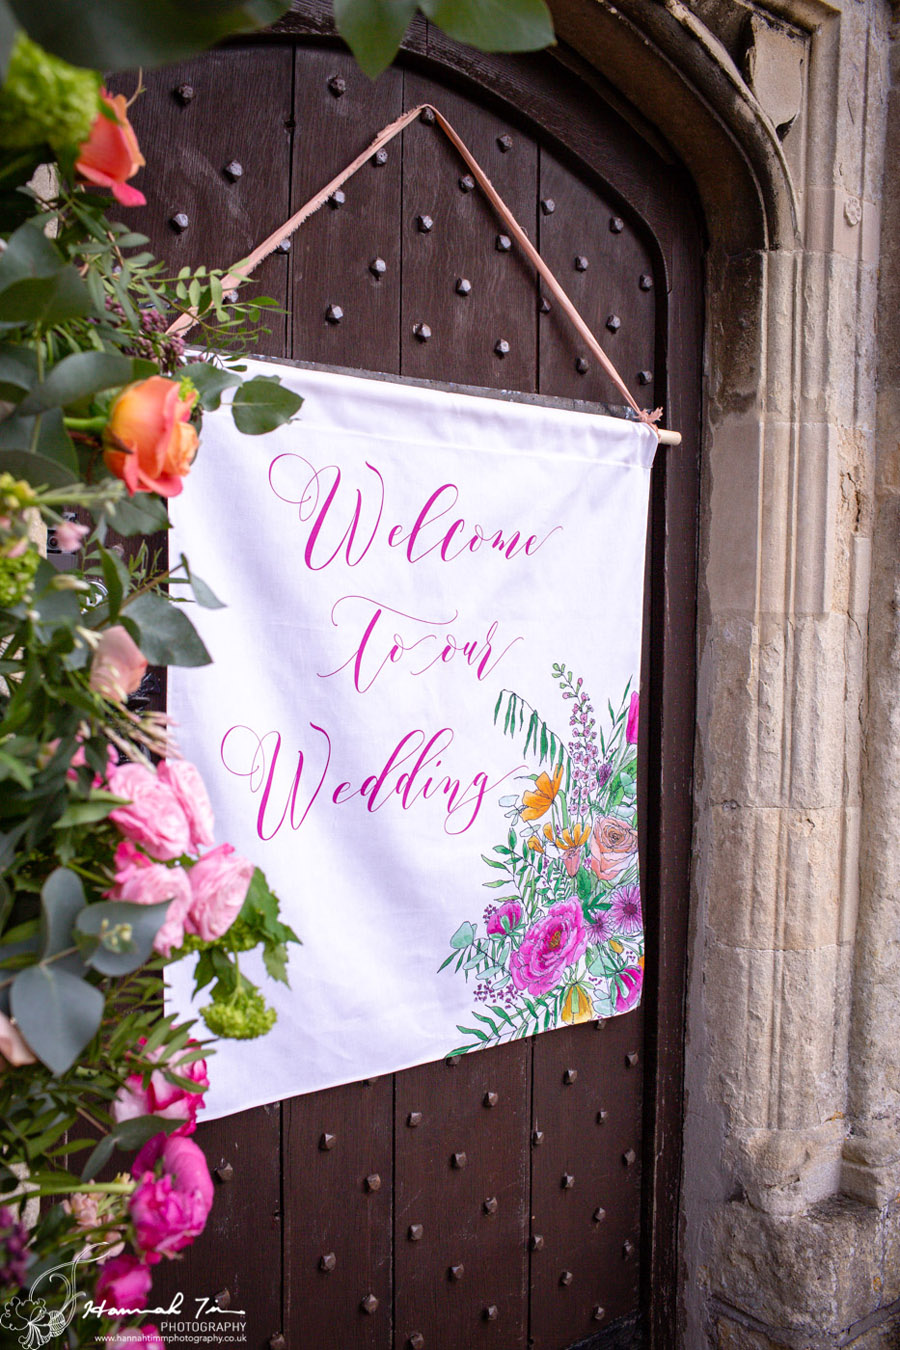 Fabulous spring colour for an Old Church Farm wedding! Photography credit Hannah Timm (27)